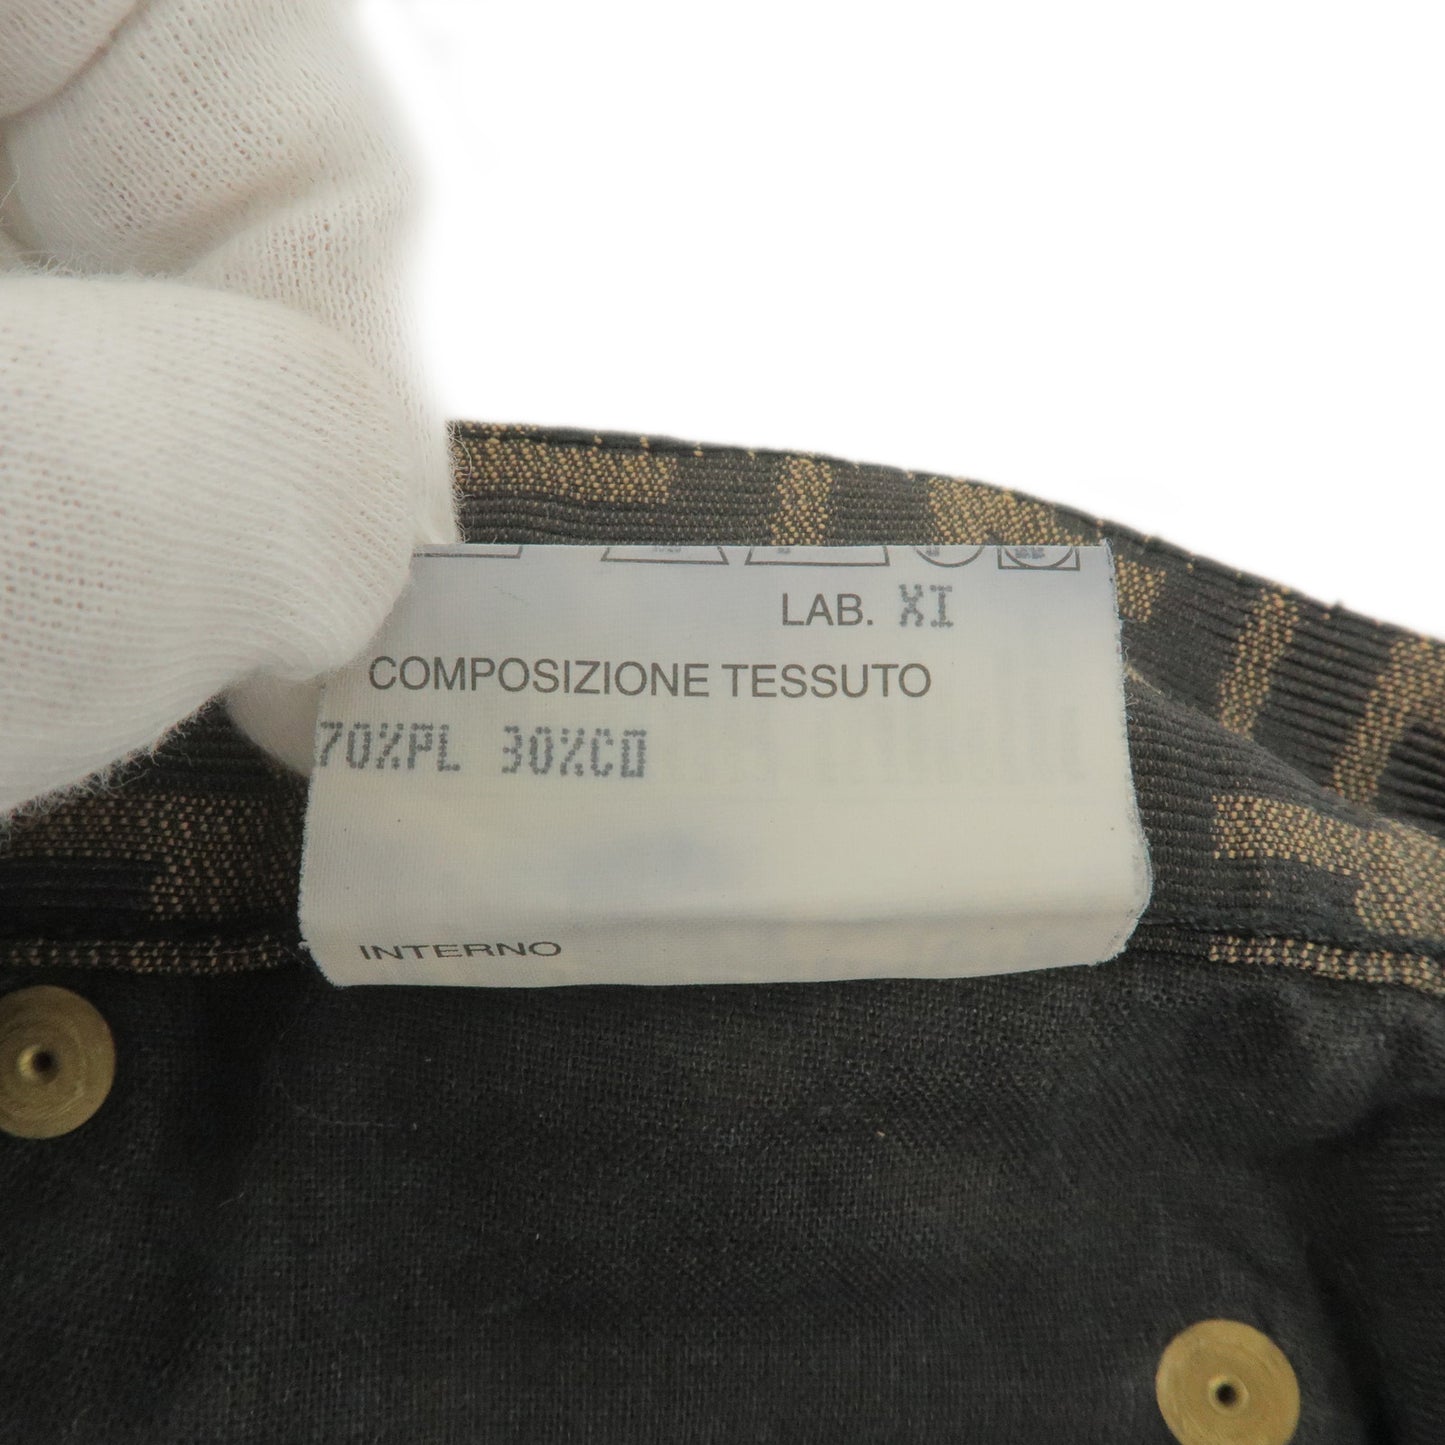 FENDI Zucca Print Polyester Cotton Skirt Size 24 09.541310 69960